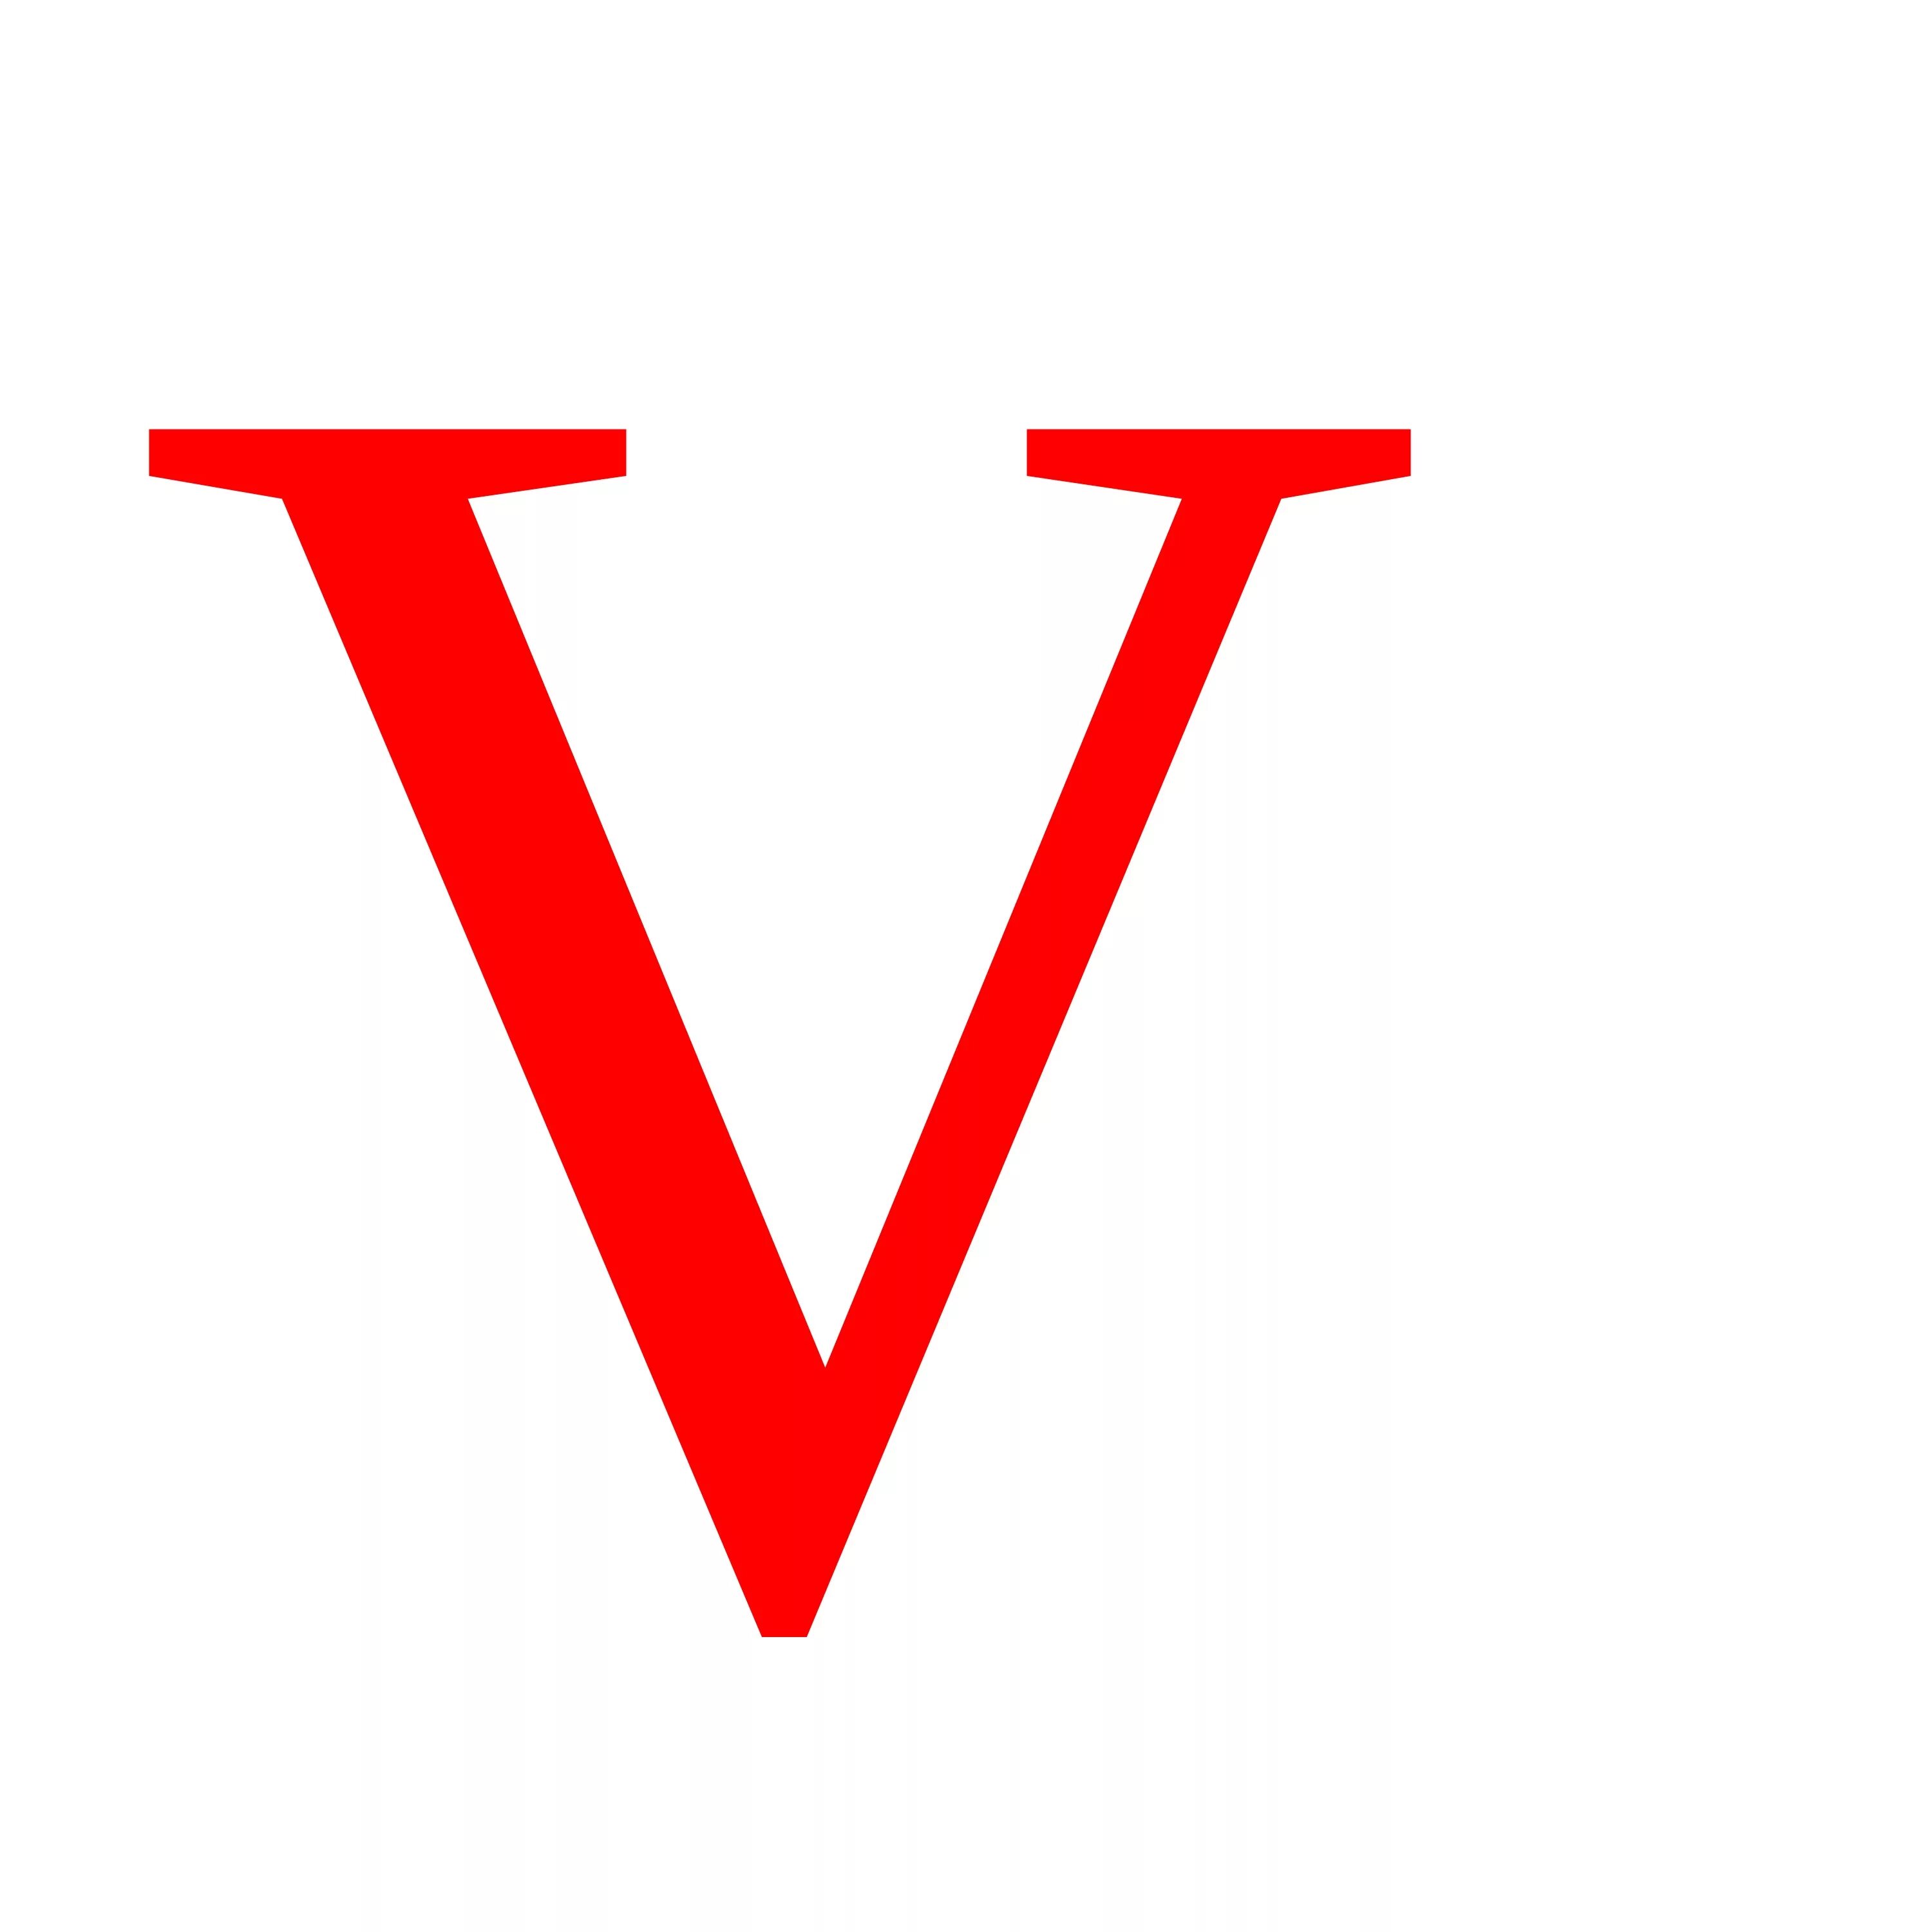 V. Латинская буква v. Буква v на белом фоне. Красная буква v. Буква v без фона.